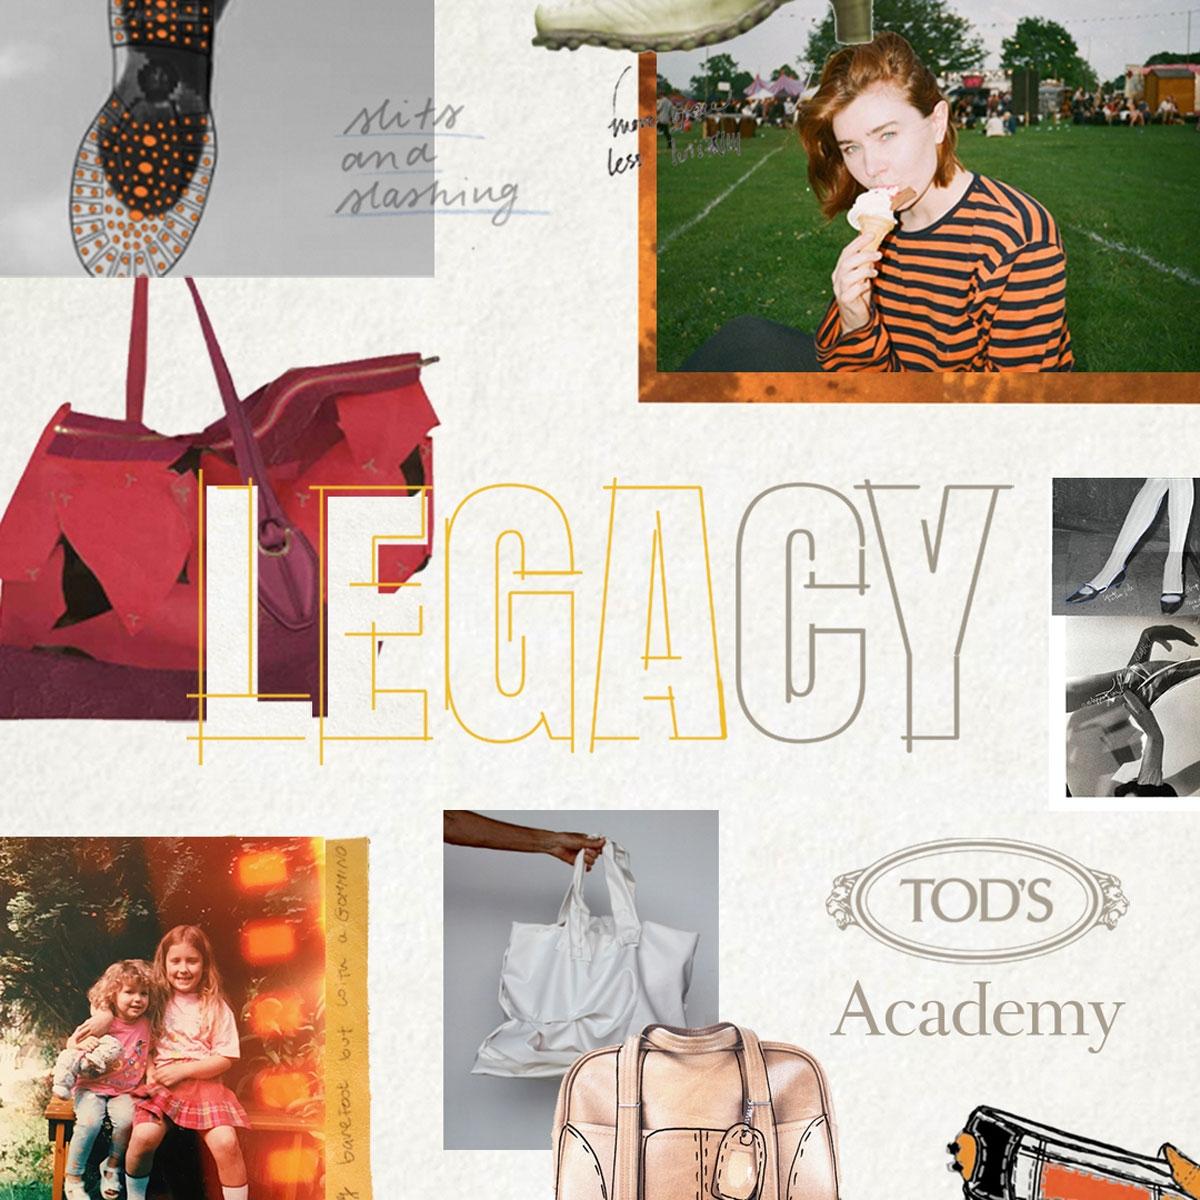 Tod's & Central Saint Martins MA Fashion present Legacy